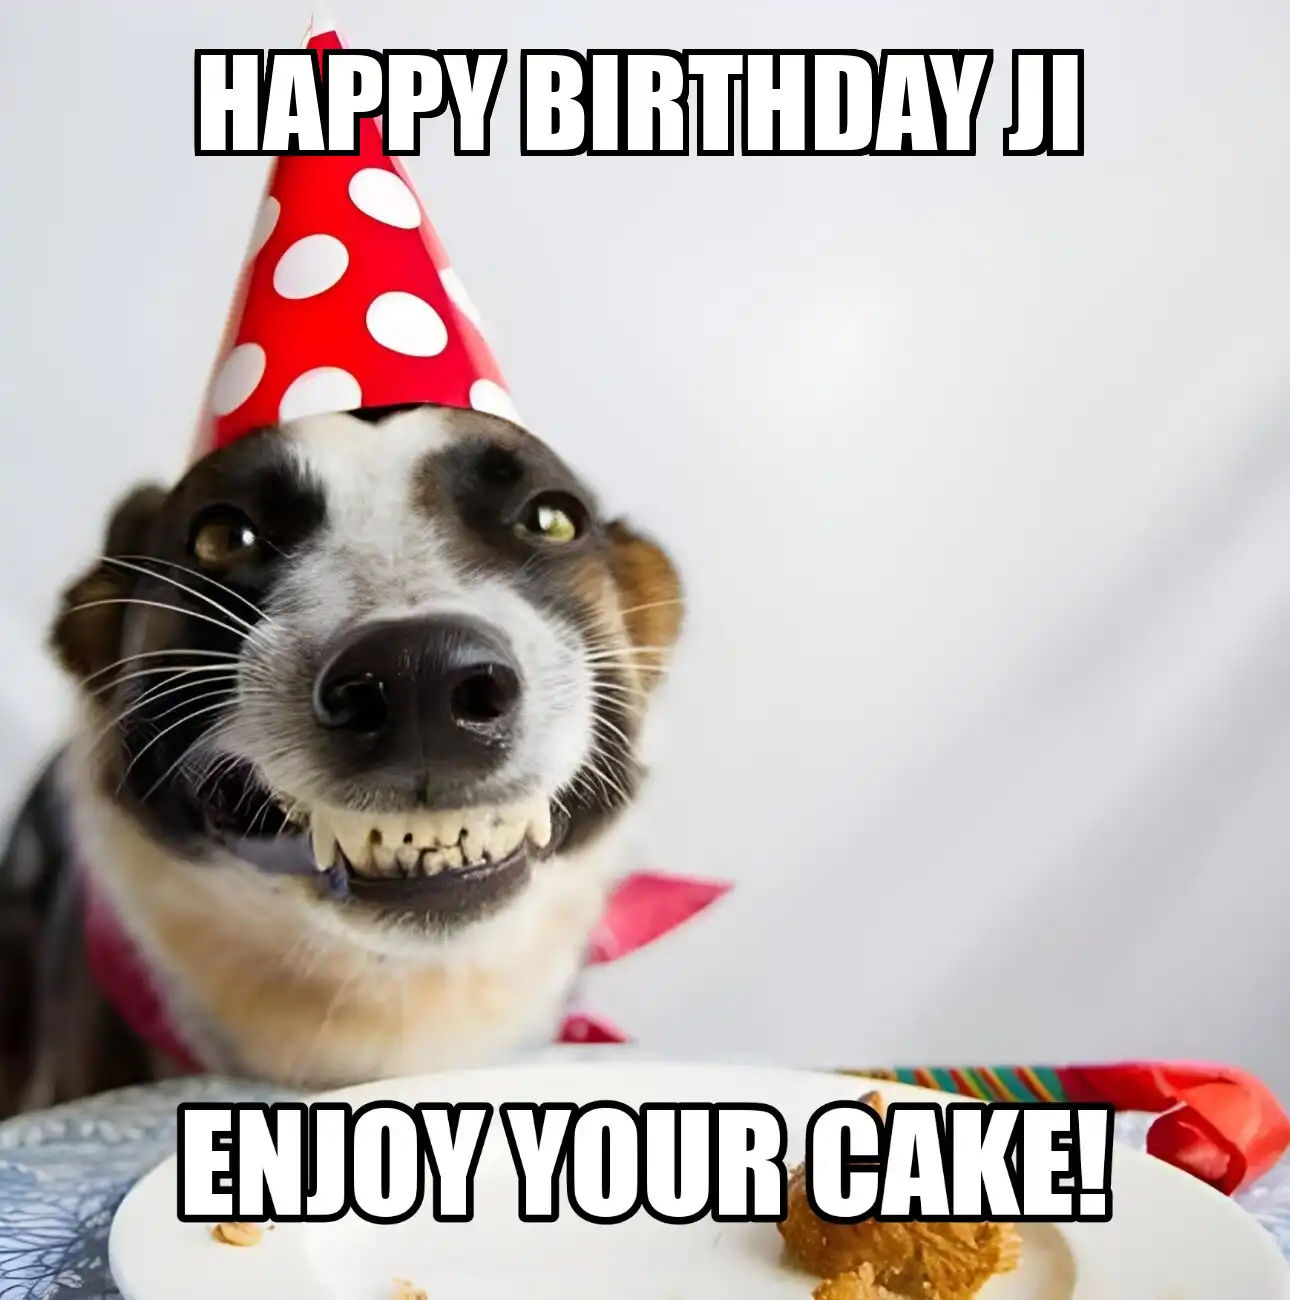 Happy Birthday Ji Enjoy Your Cake Dog Meme